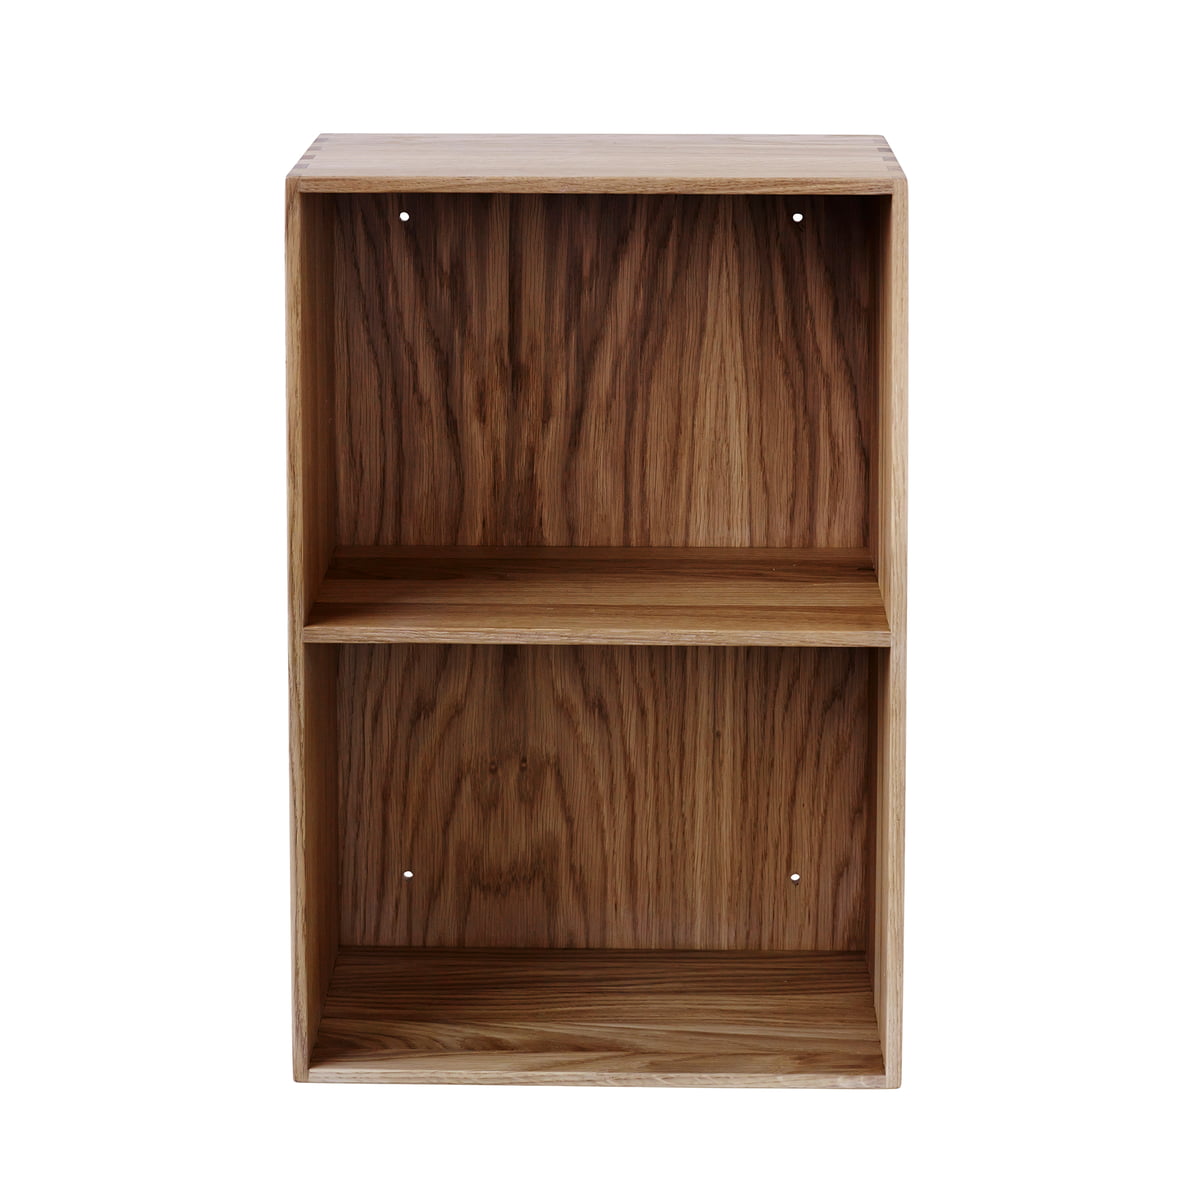 Fdb bookshelf Connox - B98 | møbler